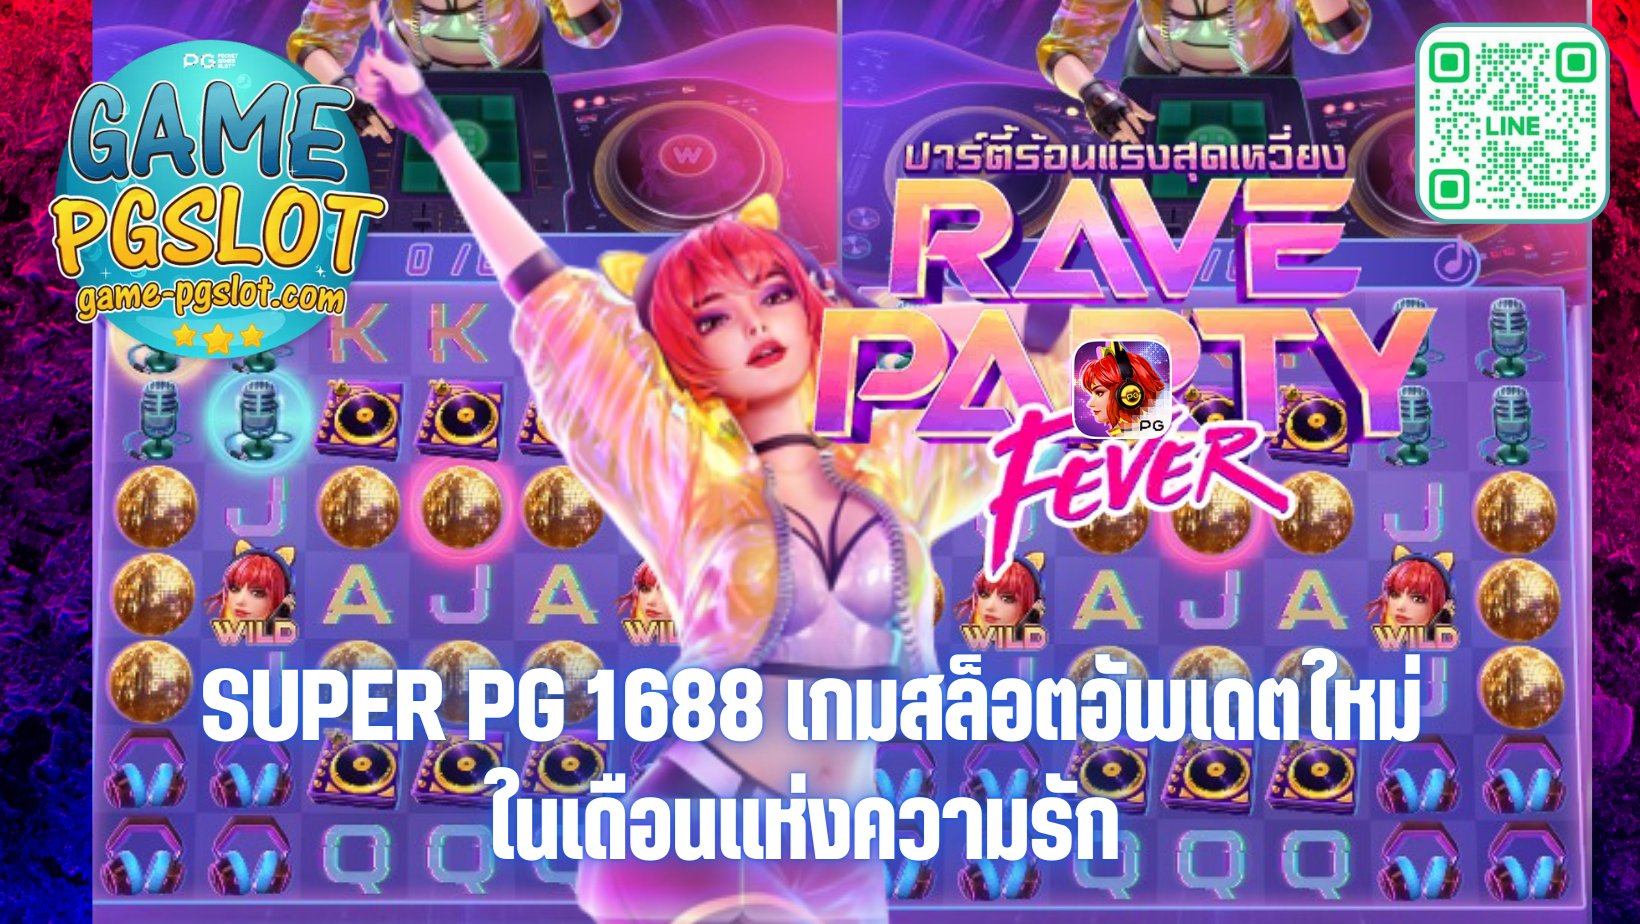 super pg 1688 - Rave Party Fever